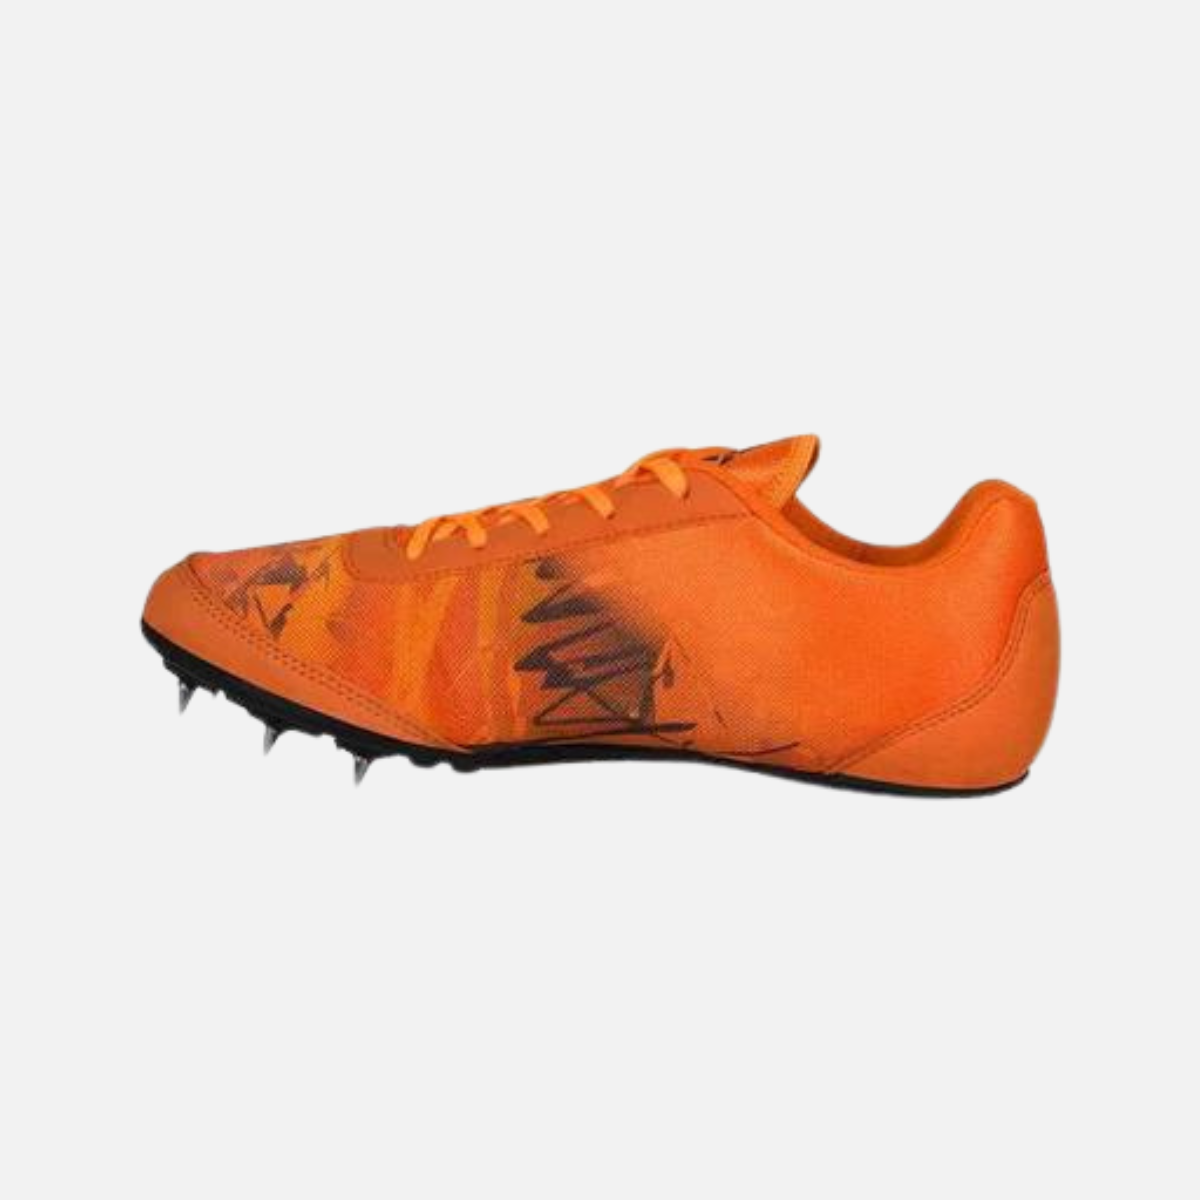 NIVIA Zion-1 Spikes Running Athletic Men's Shoes -Orange